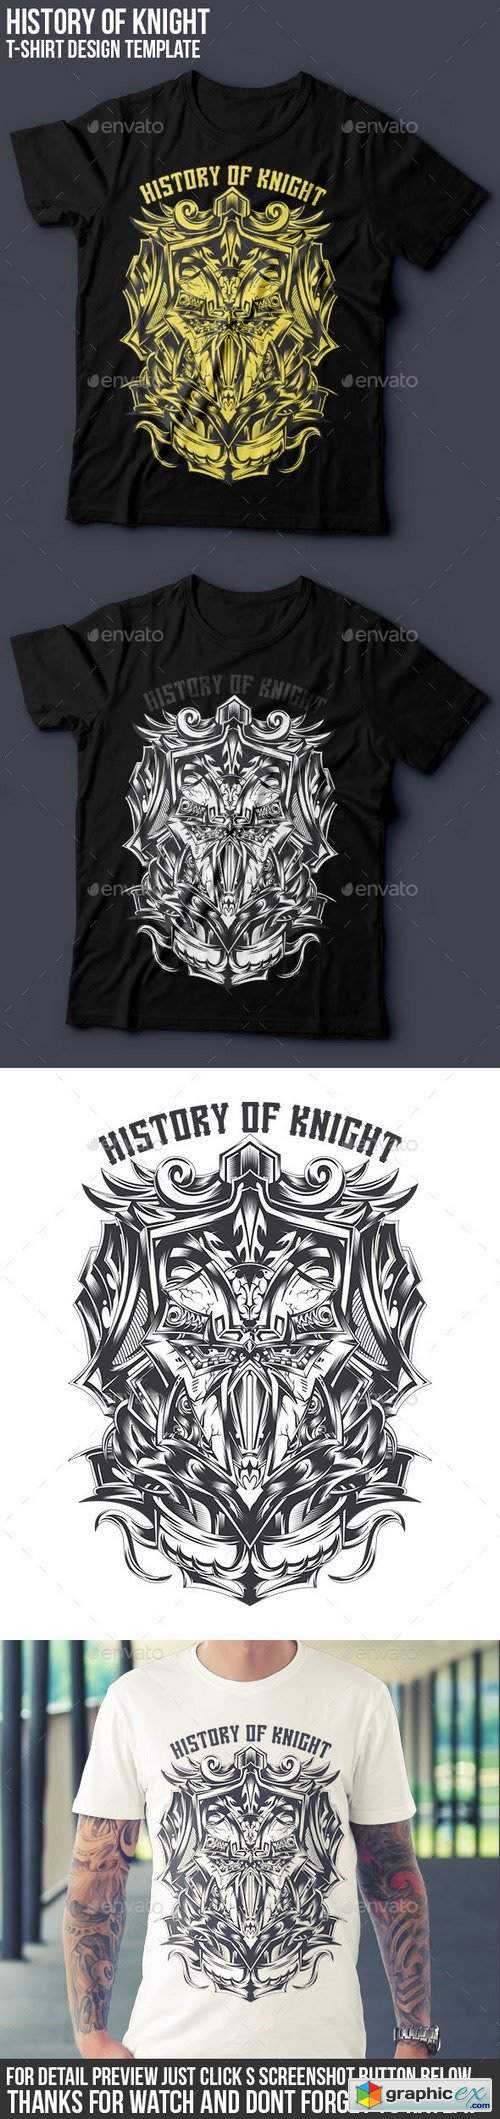 History of Knight T-shirt Design